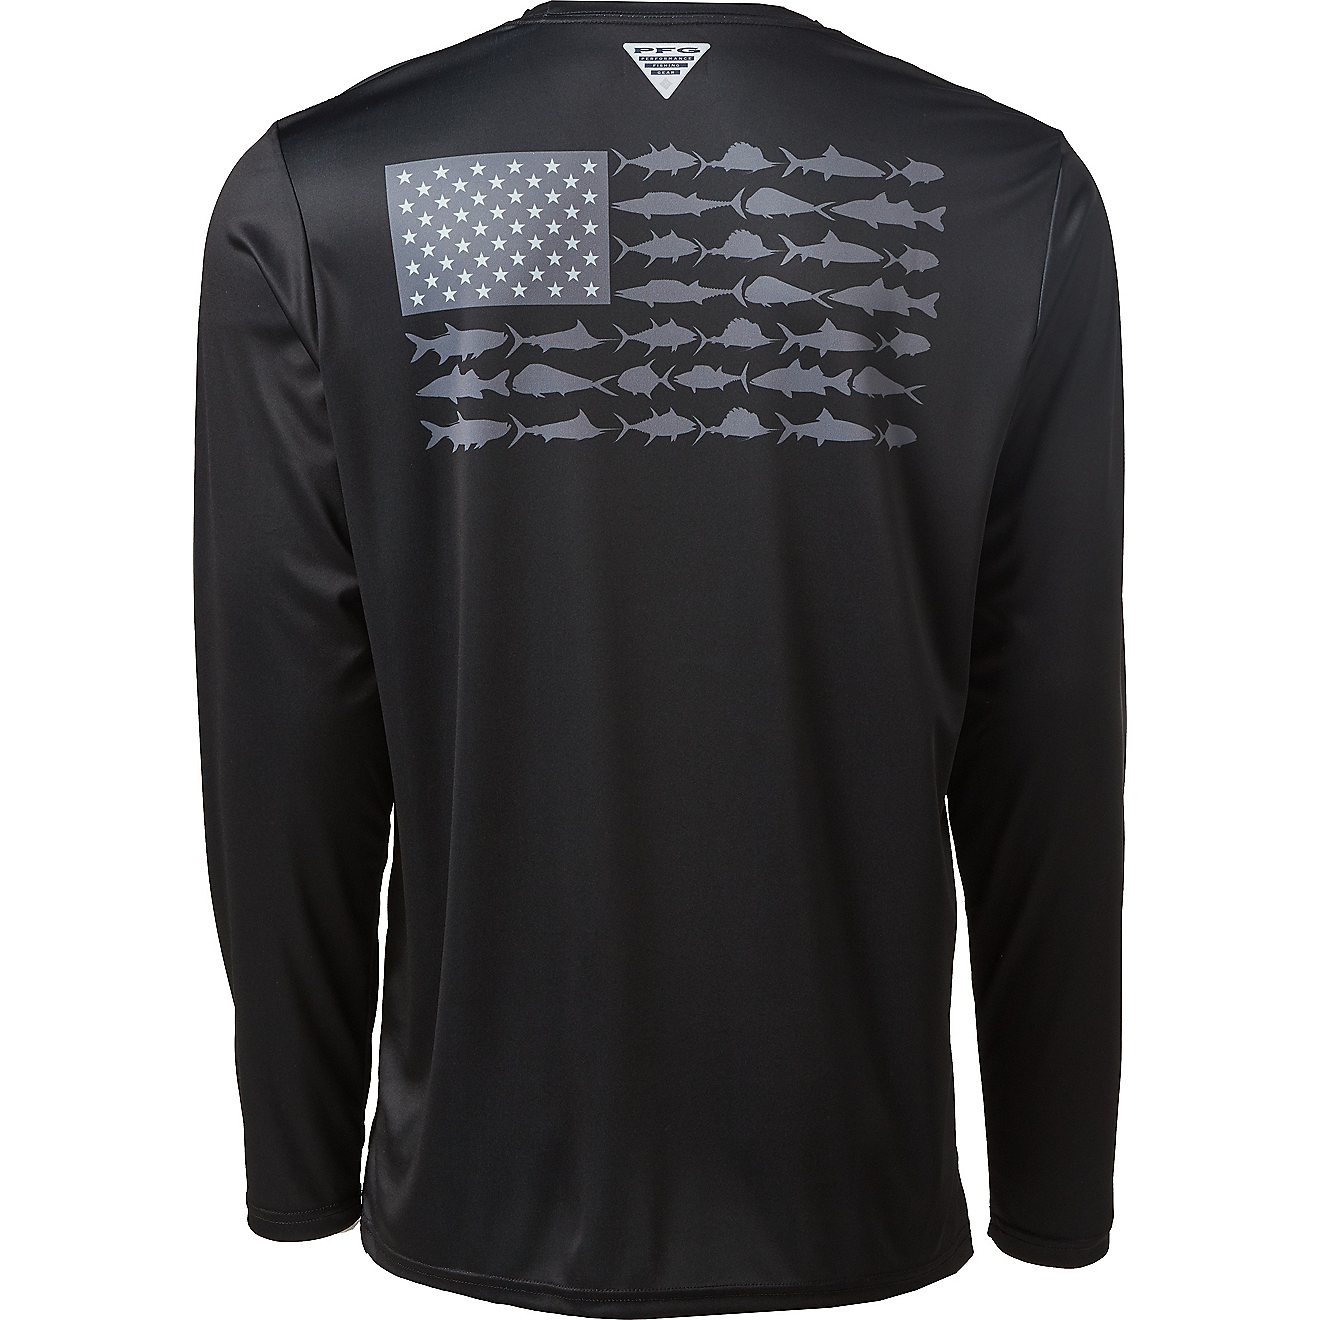 Columbia Sportswear Men's Terminal Tackle PFG Fish Flag Long Sleeve T-shirt                                                      - view number 6